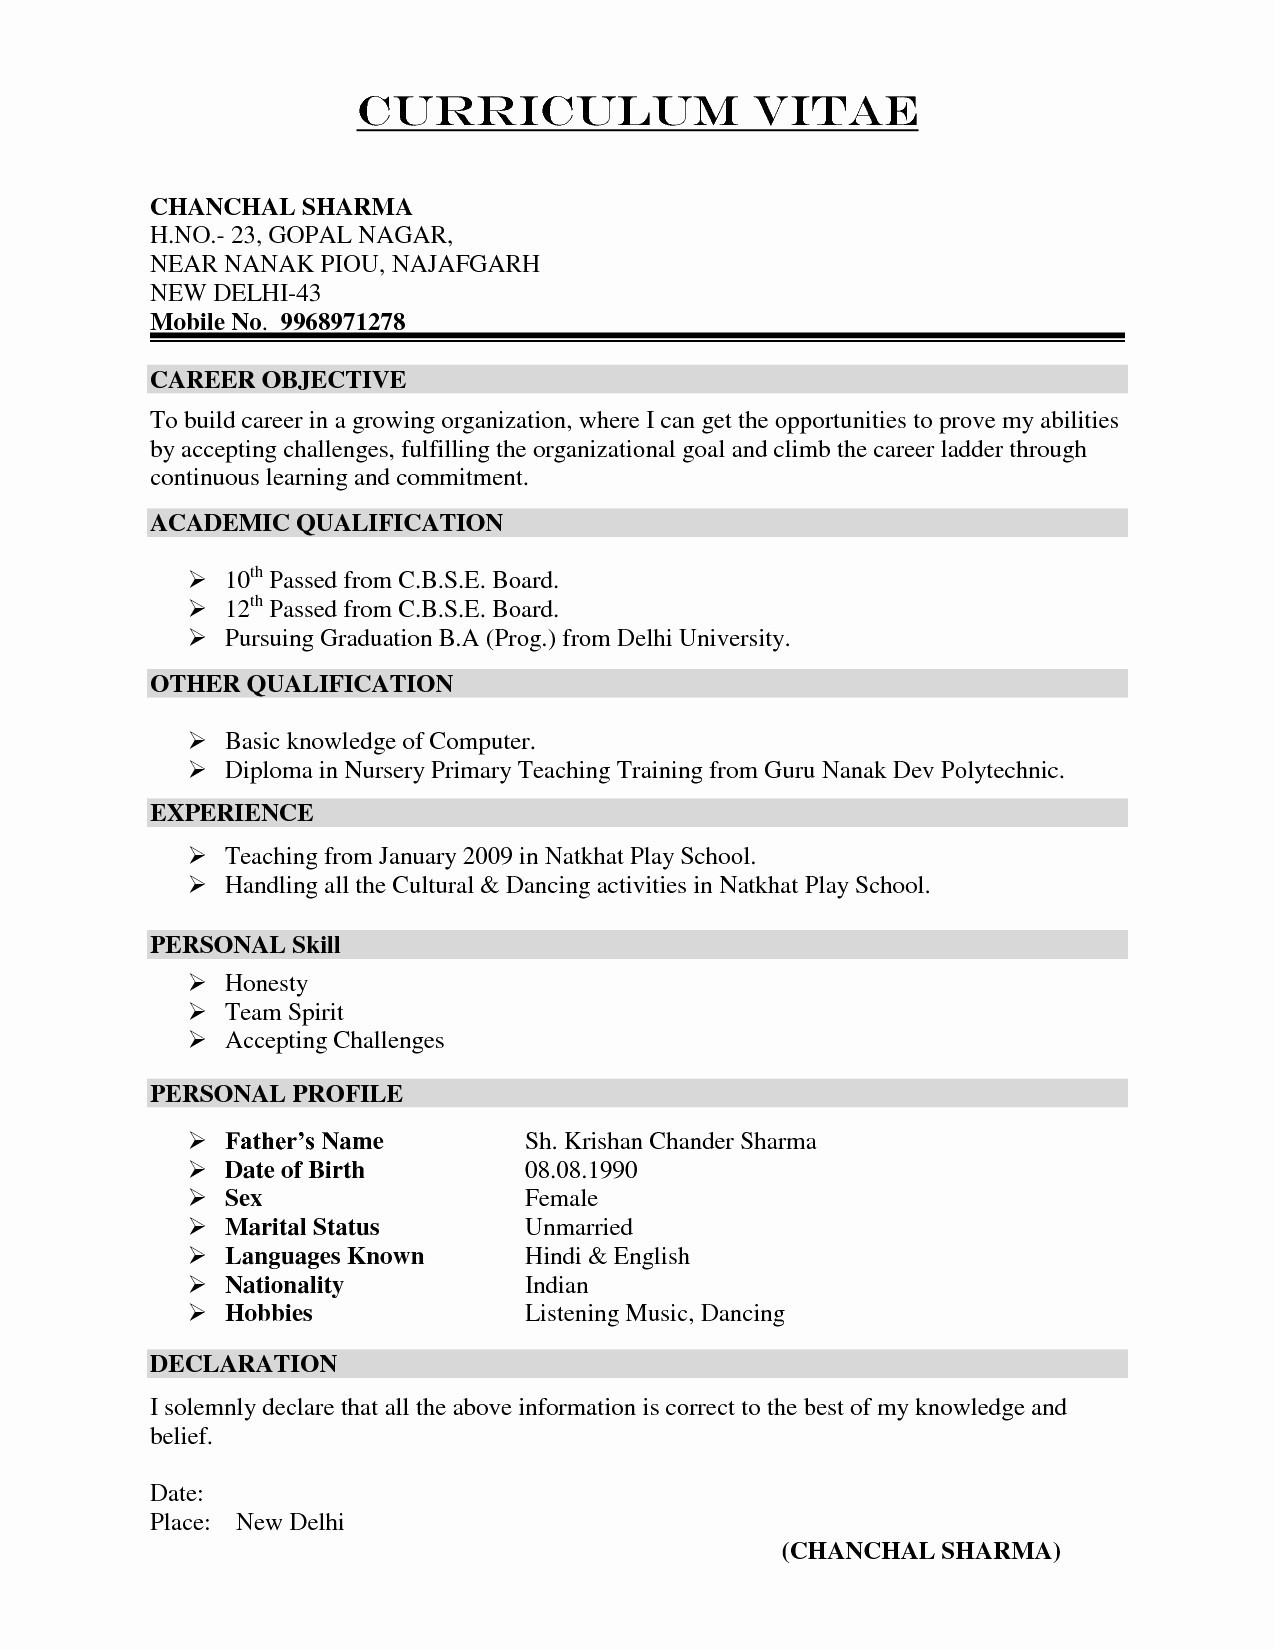 Sample Letter Of Recommendation Template Free - Fresh Resume Cover Letter format